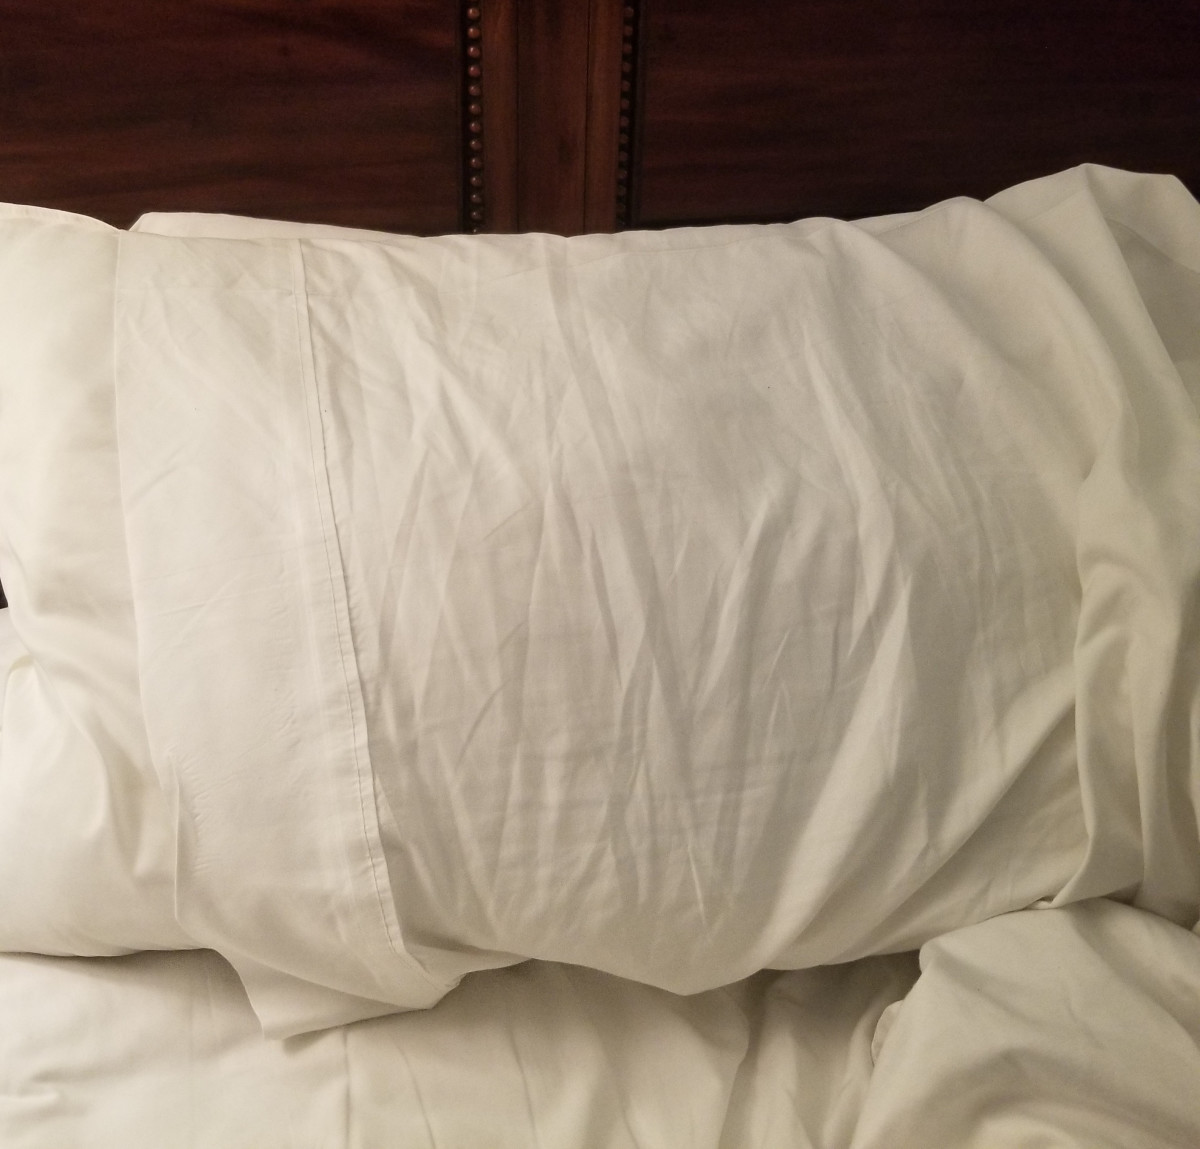 A pillow can enhance your comfort when you sleep. 